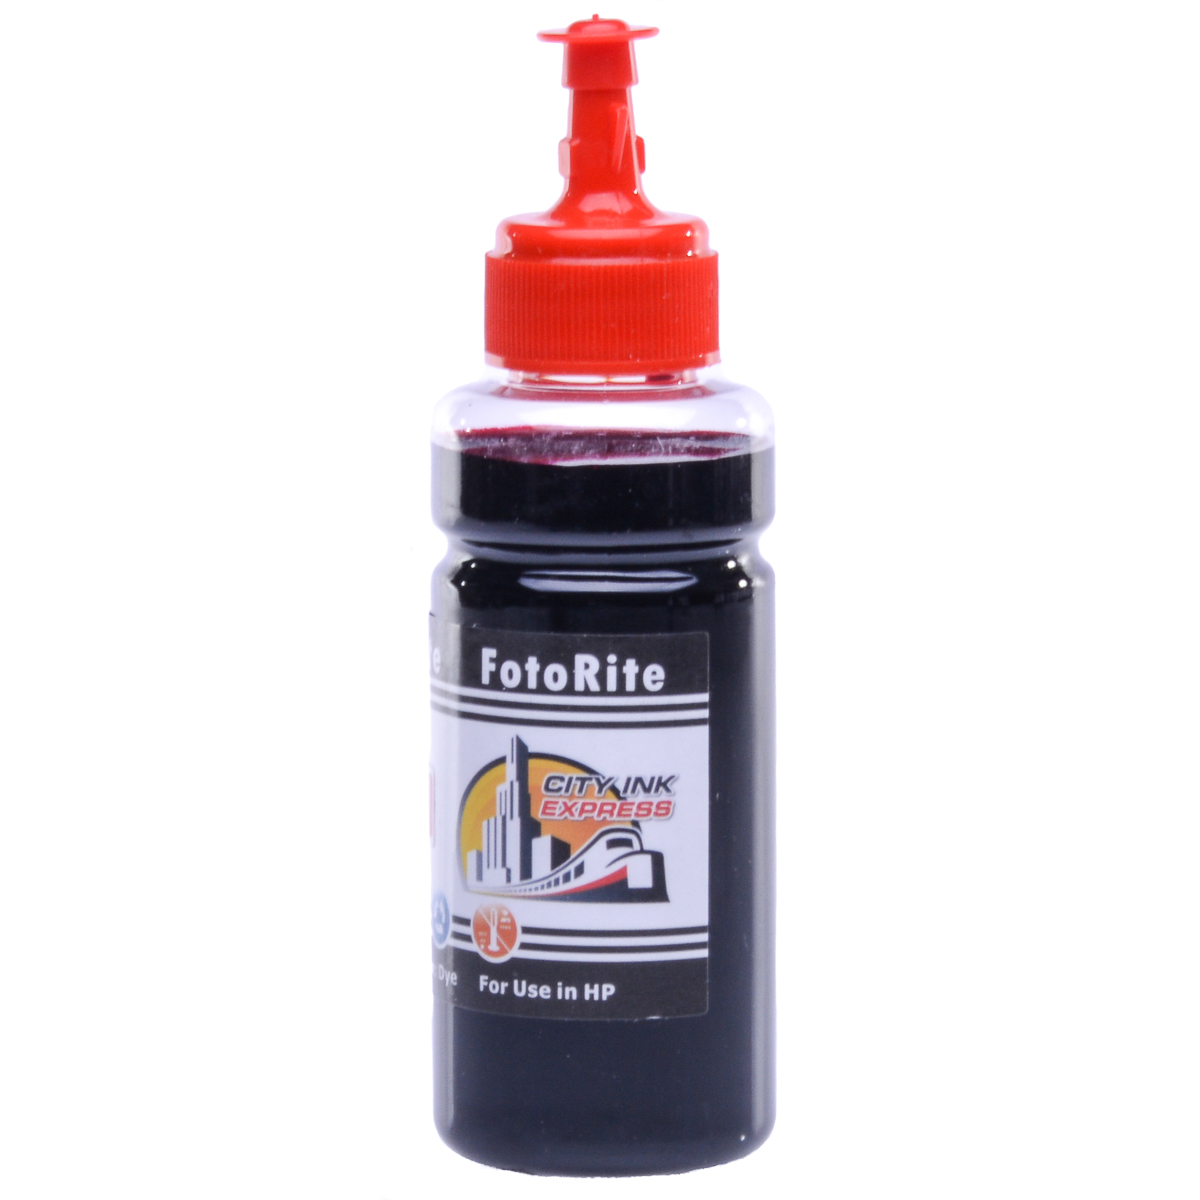 Cheap Magenta dye ink replaces HP Photosmart B110e - HP 364